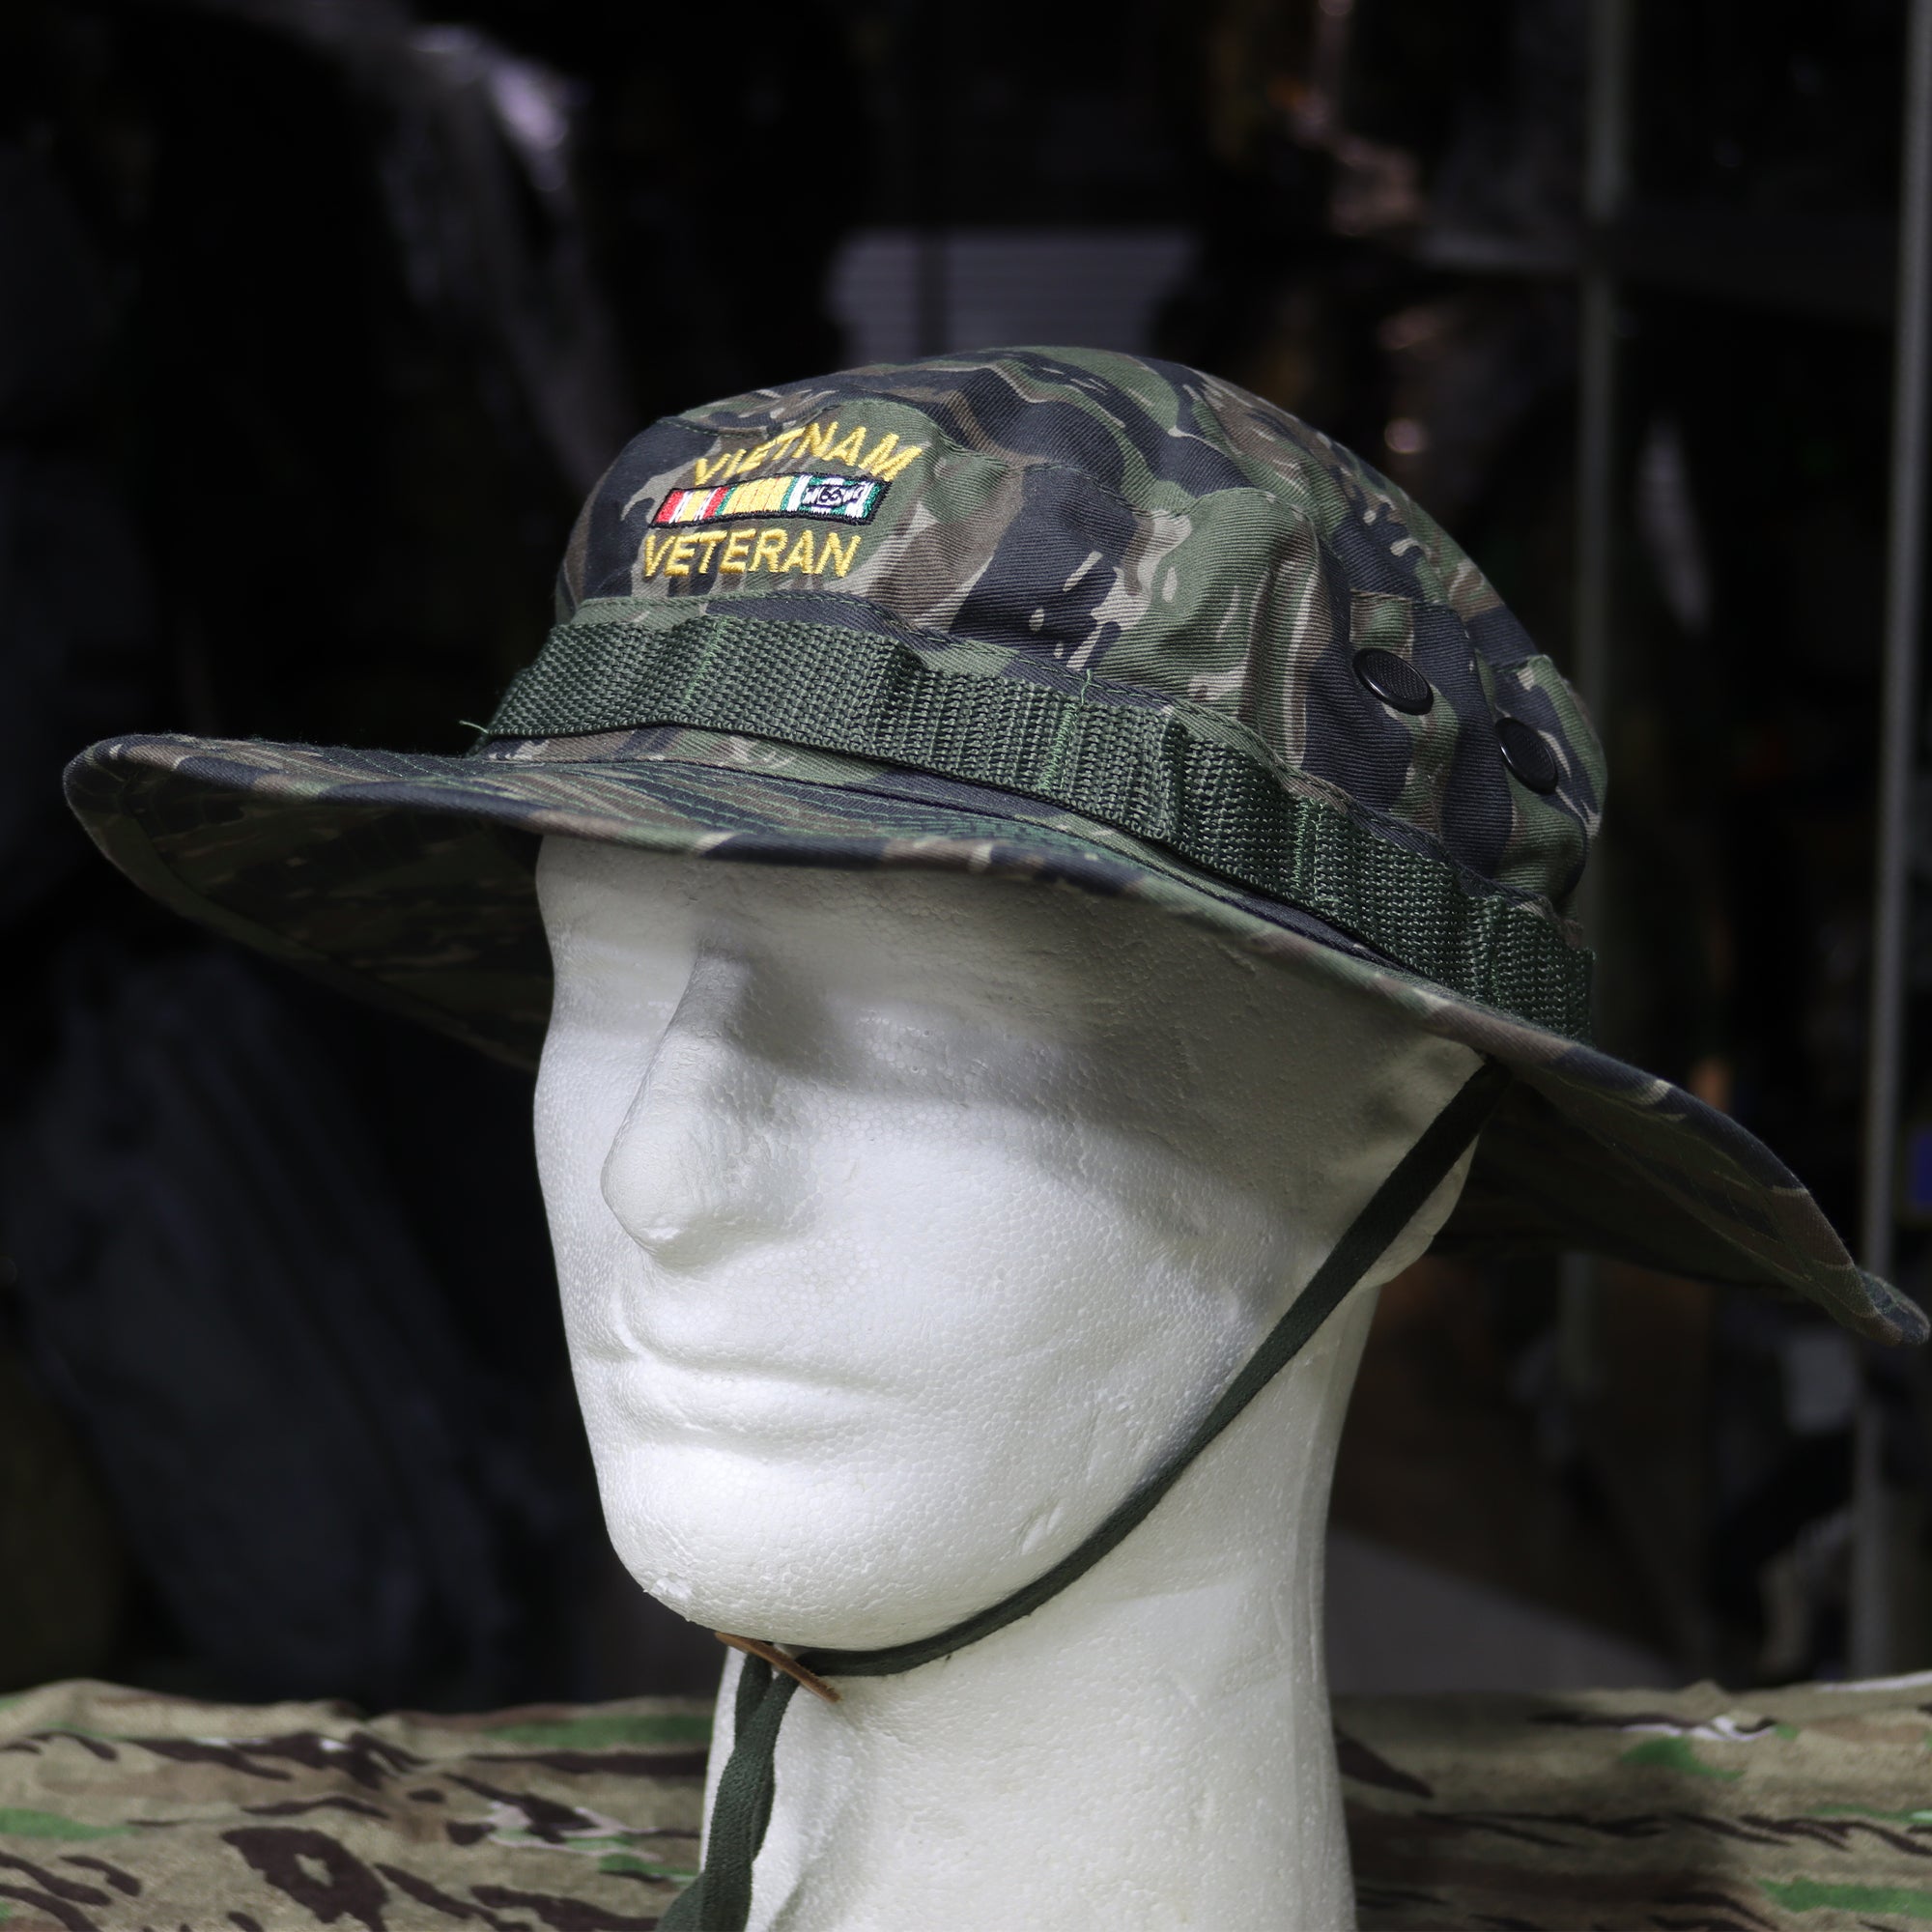 Rothco Vietnam Veteran Boonie Hat 退伍軍人荷葉帽| Military Hat